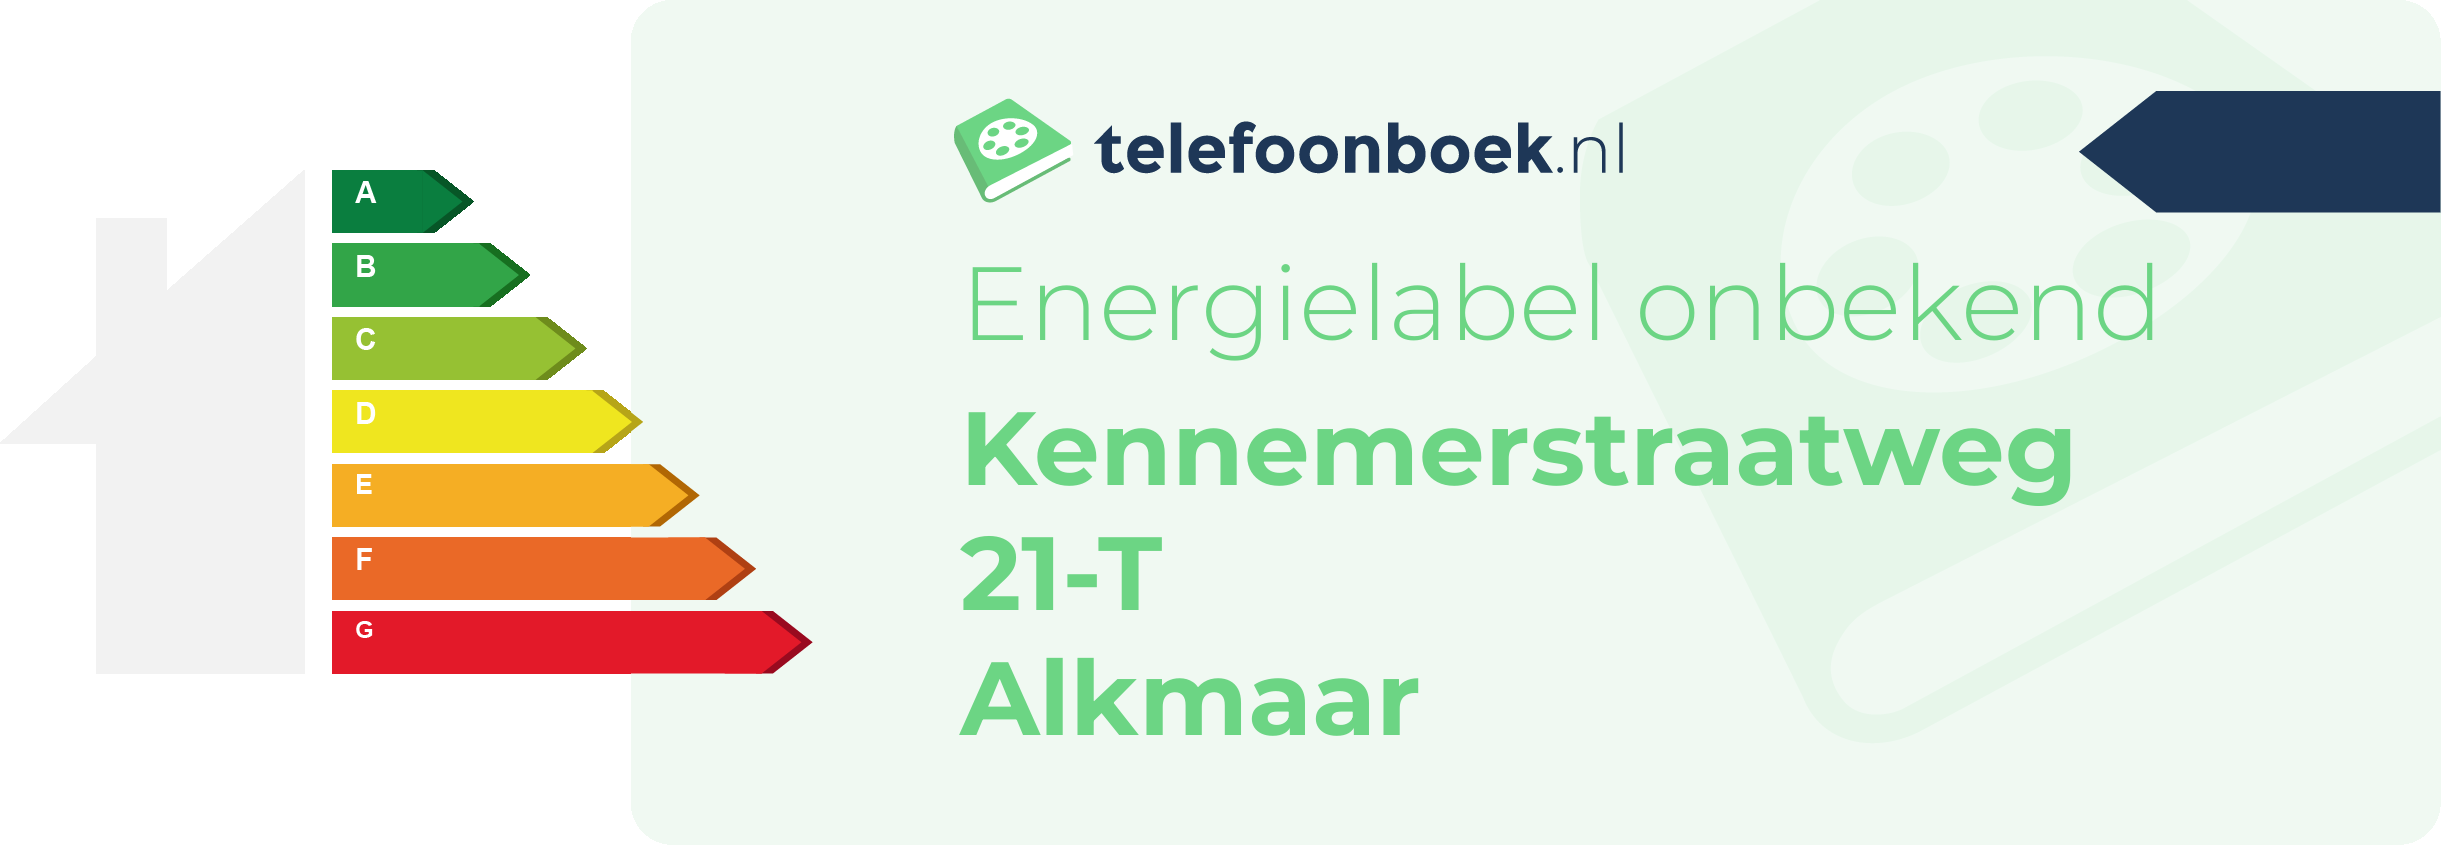 Energielabel Kennemerstraatweg 21-T Alkmaar